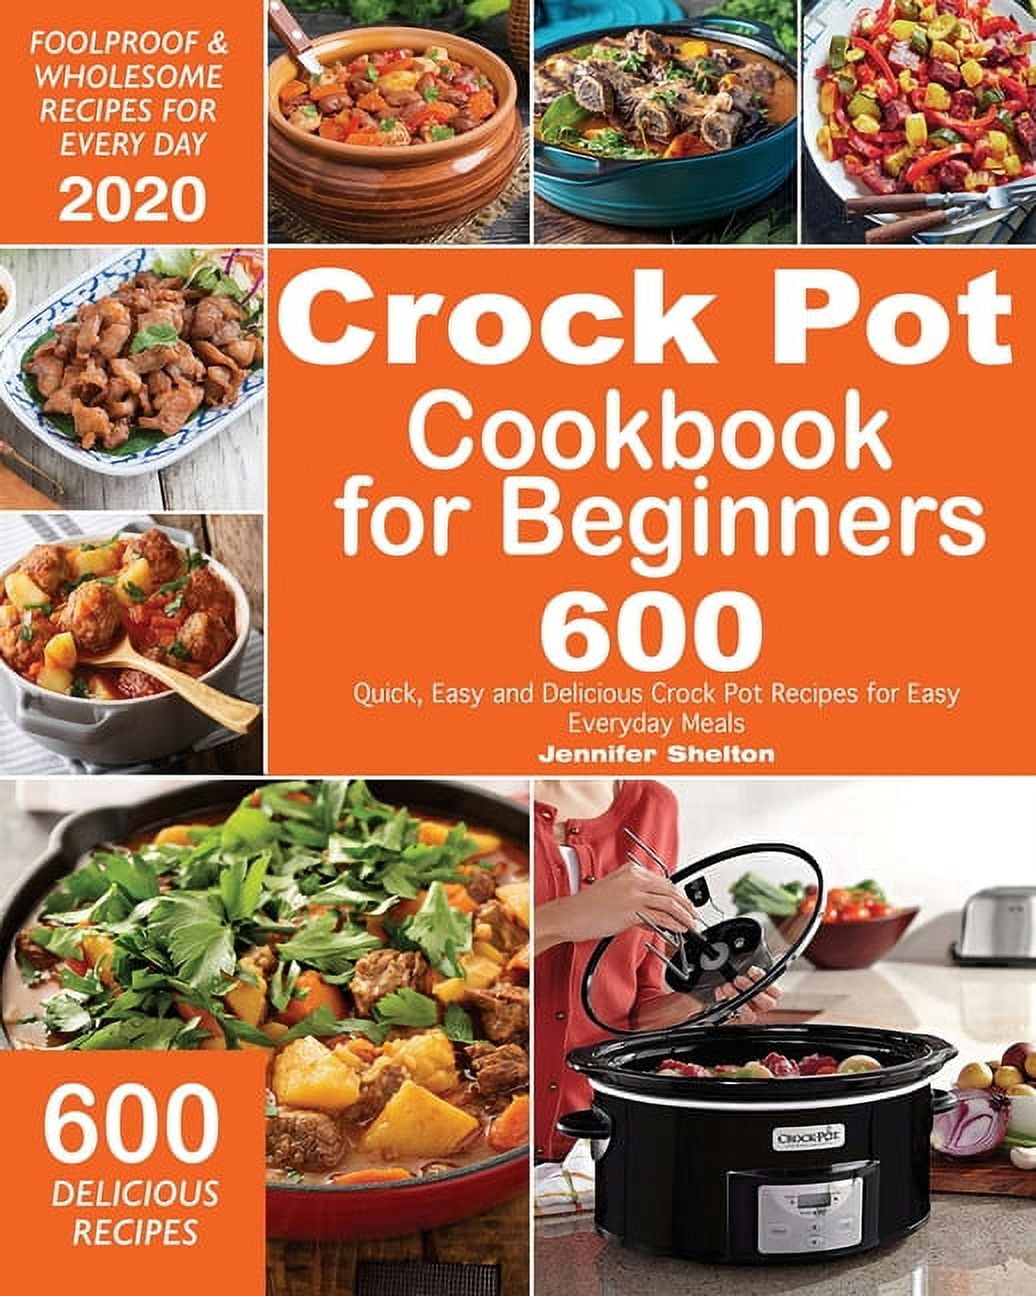 Crock Pot Cookbook: Original Slow Cooker Recipes (Paperback)